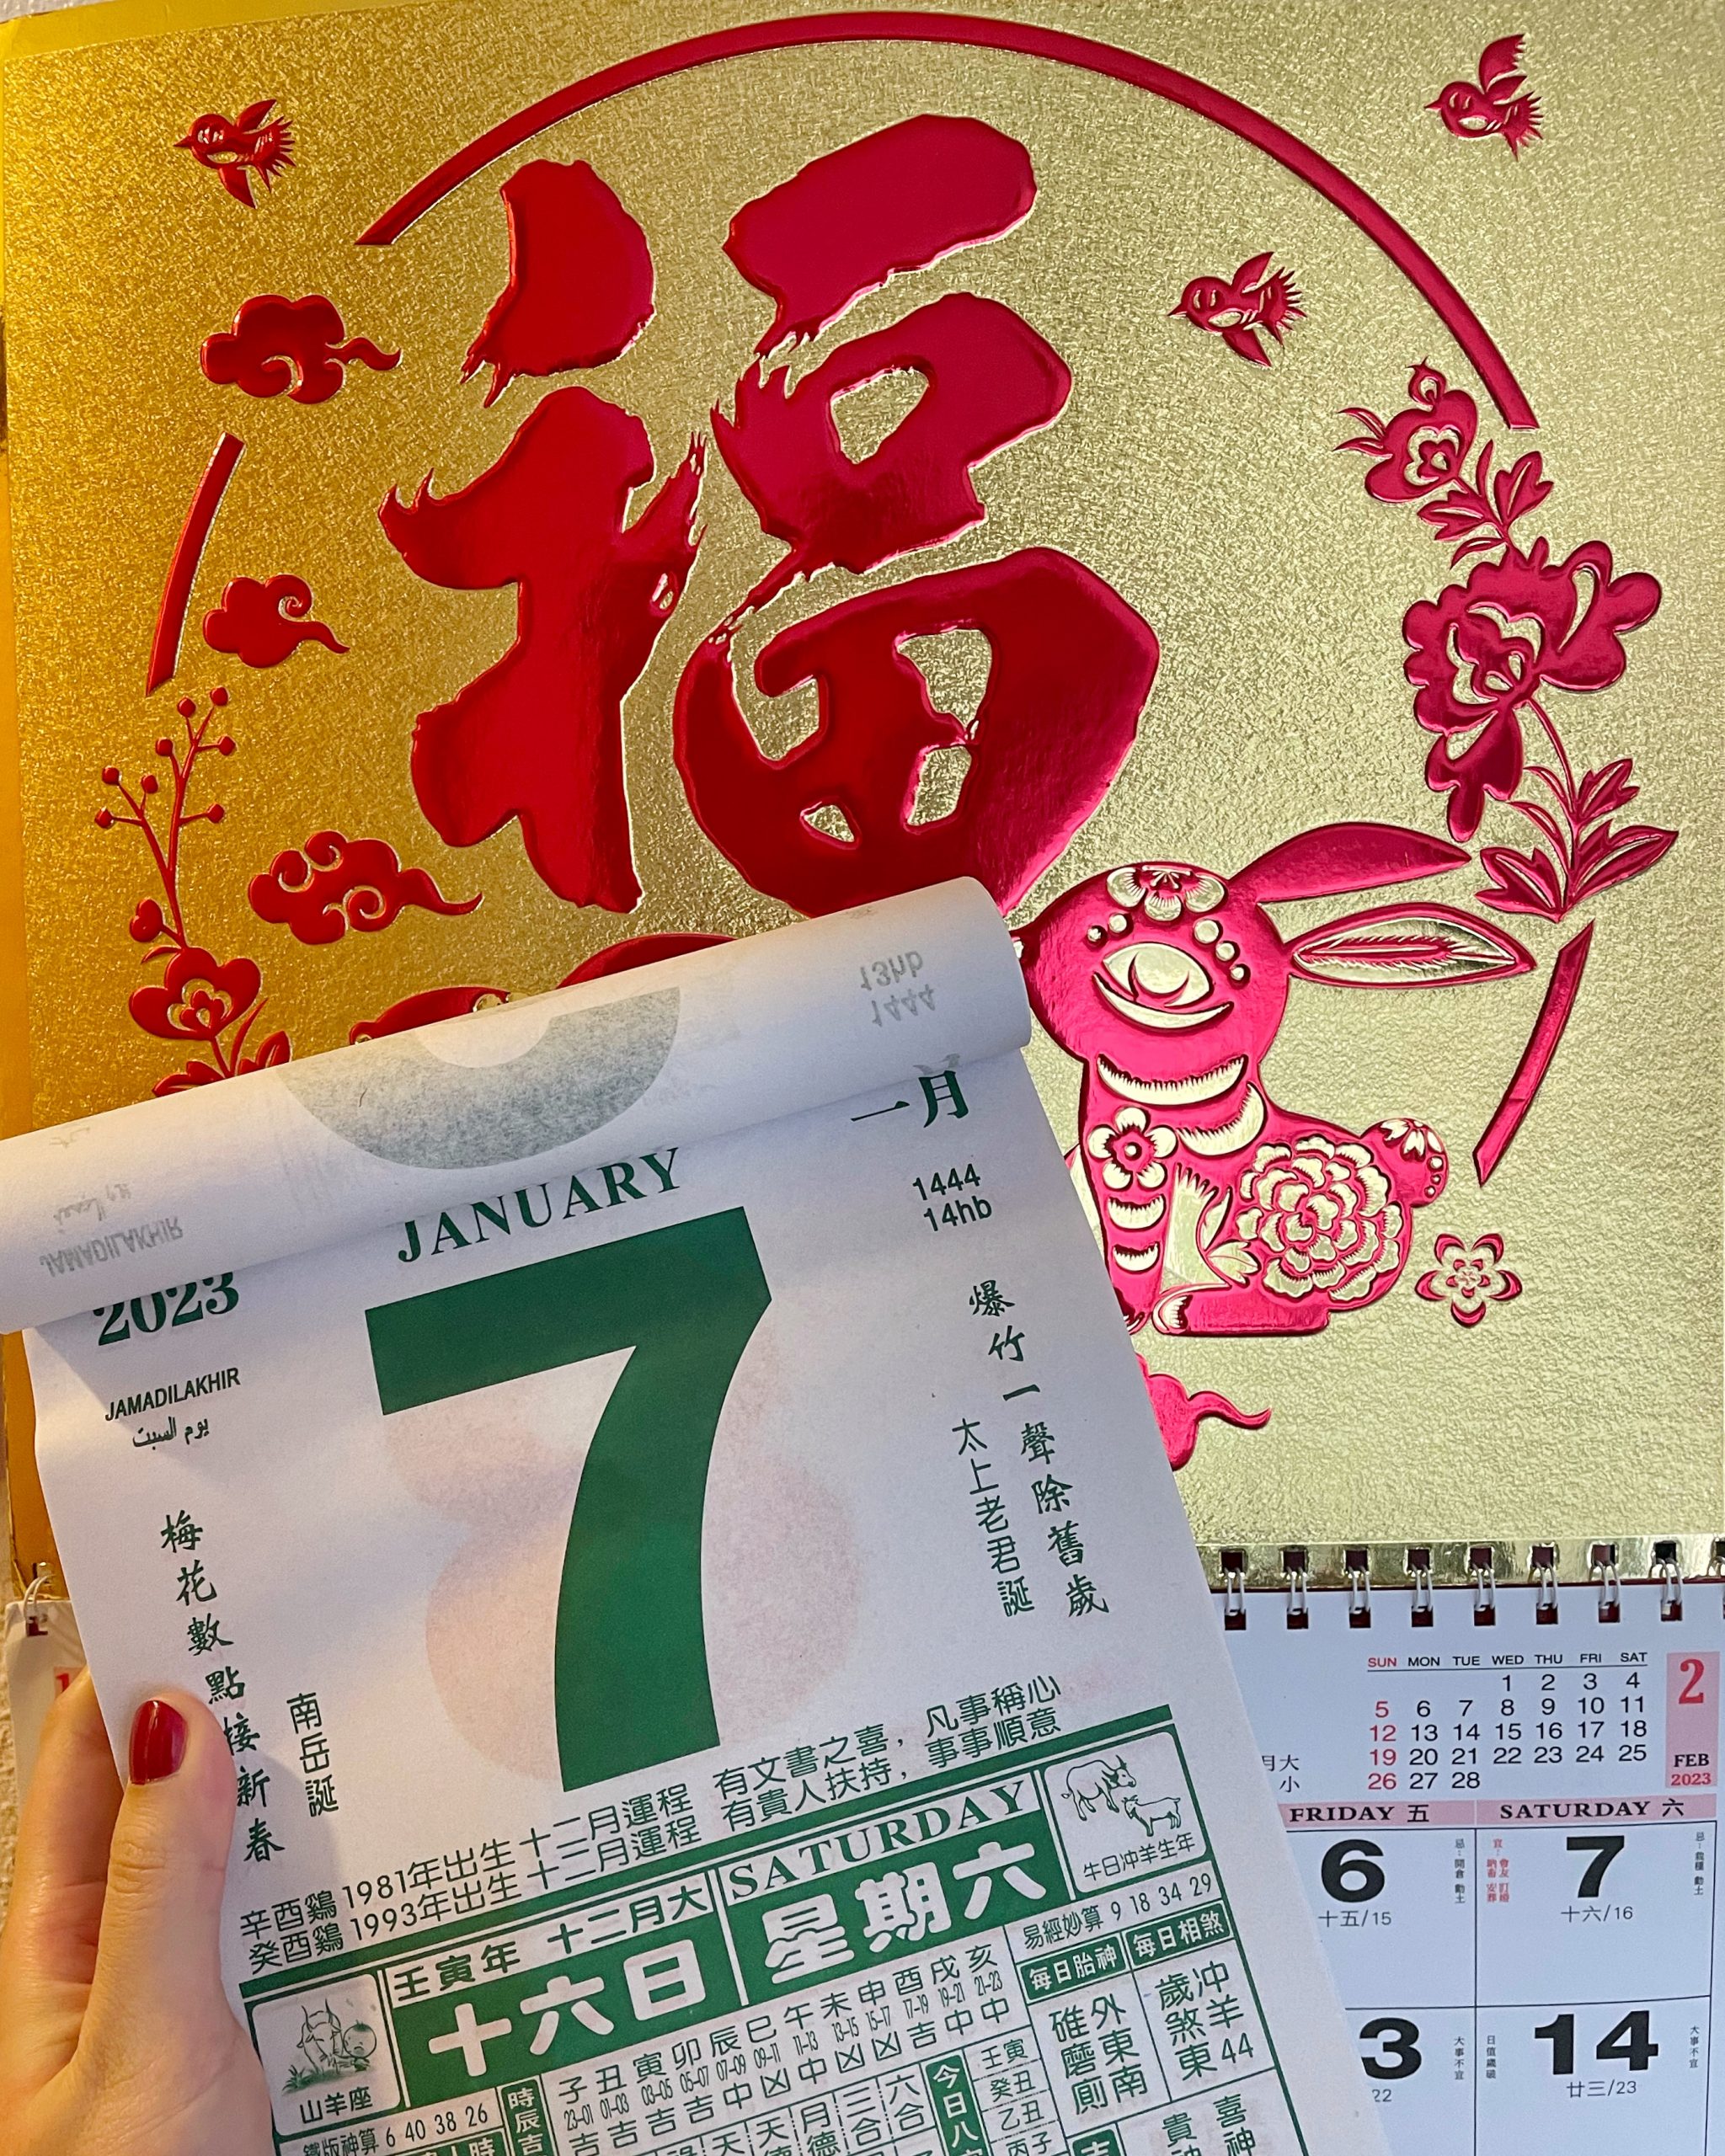 Lunar New Year Group Tour of Mong Kok